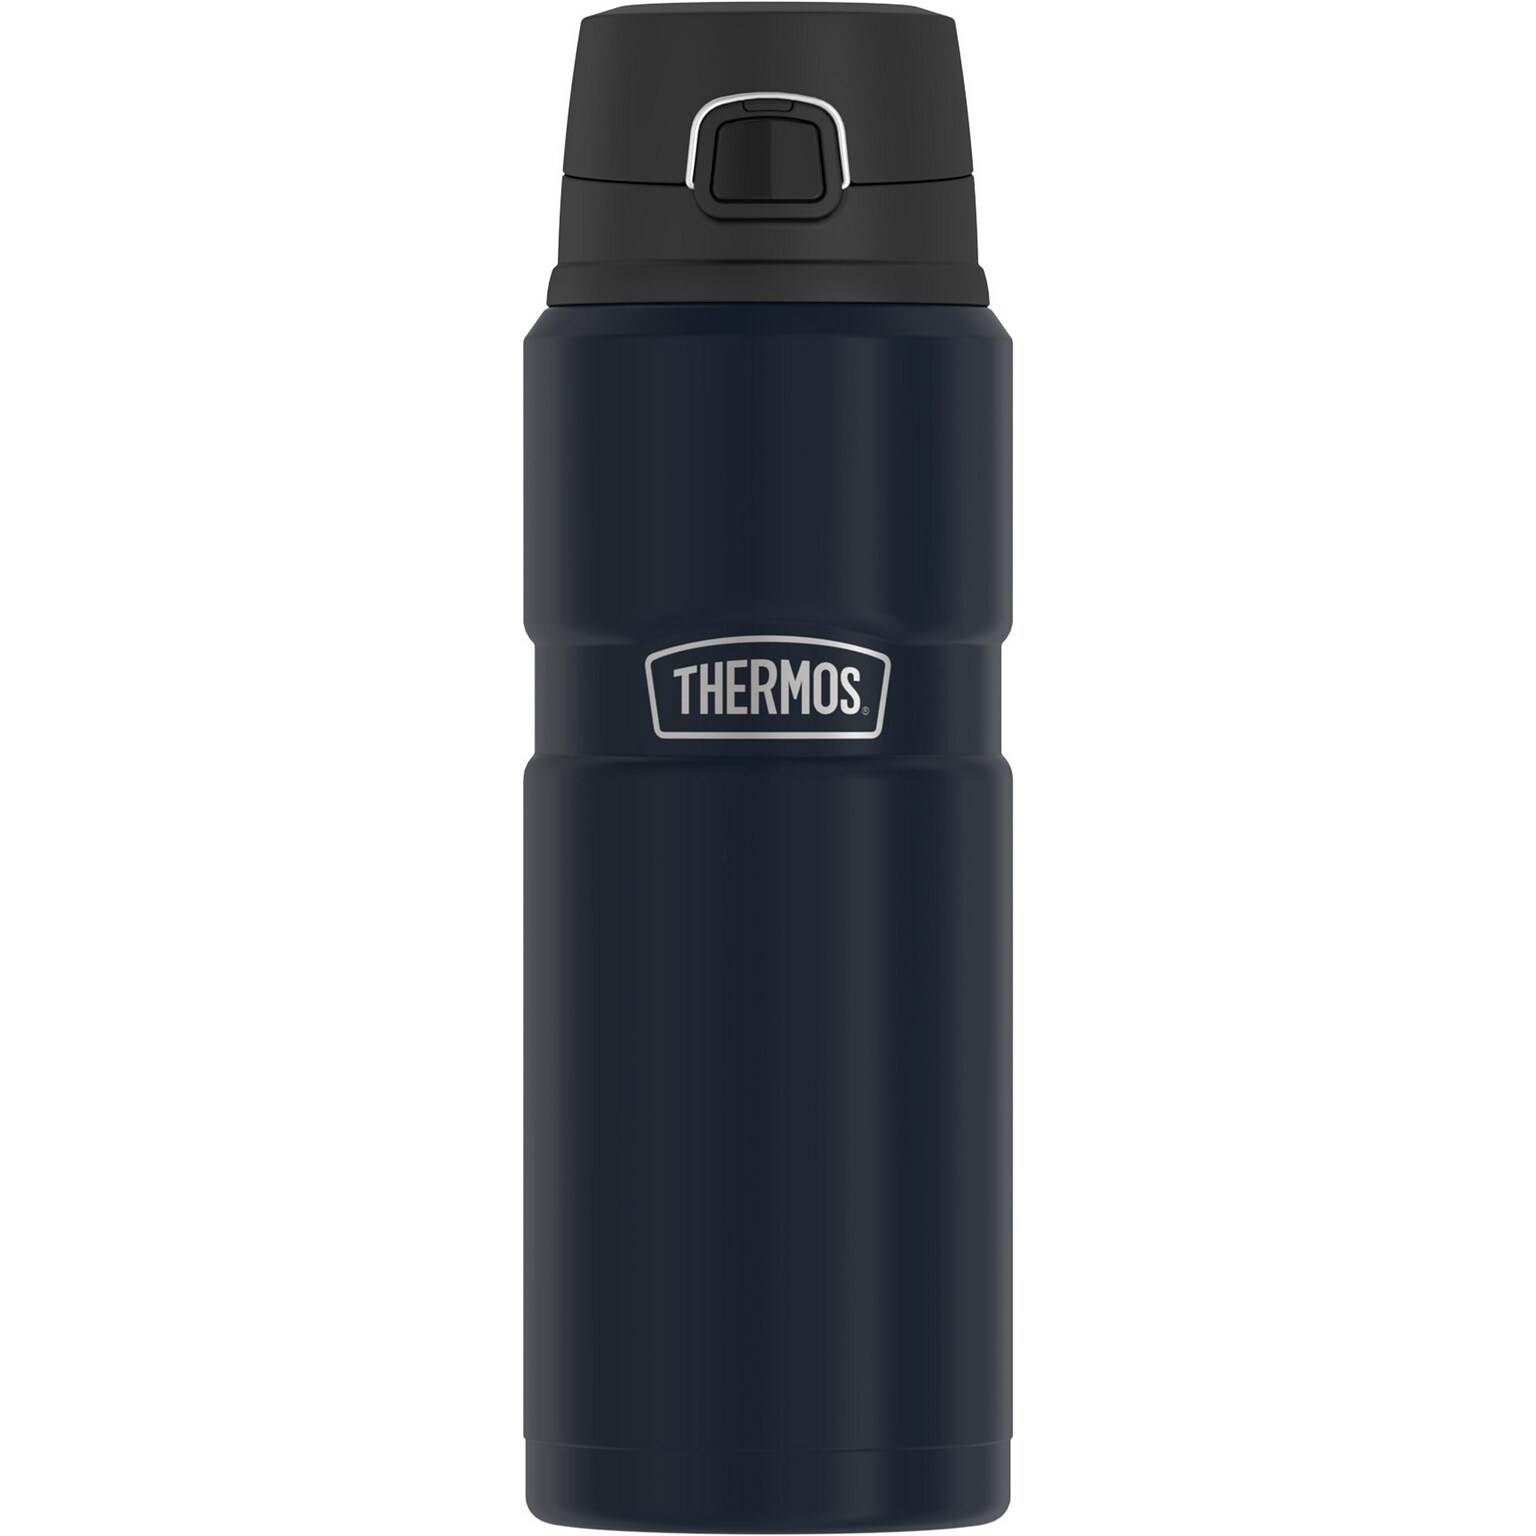 Thermos King Stainless Steel Vacuum Insulated Travel Mug, 24 oz., Midnight Blue (THRSK4000MDB4)